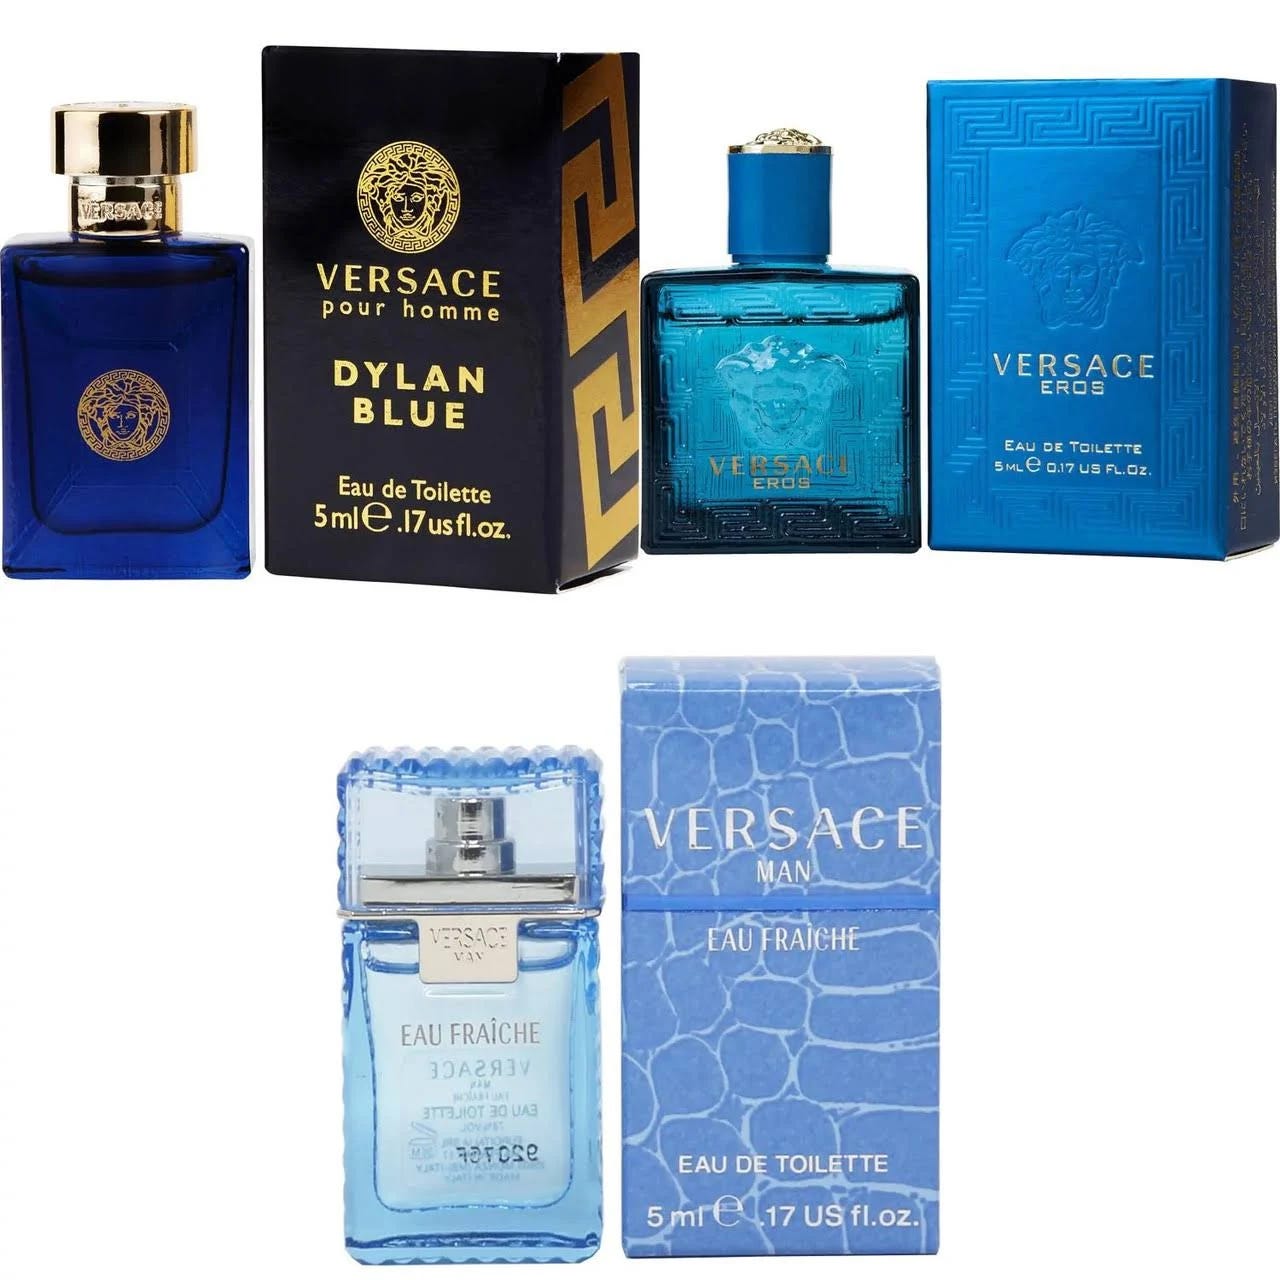 Versace Mini Set Collection: Men's Fragrance Trio | Image